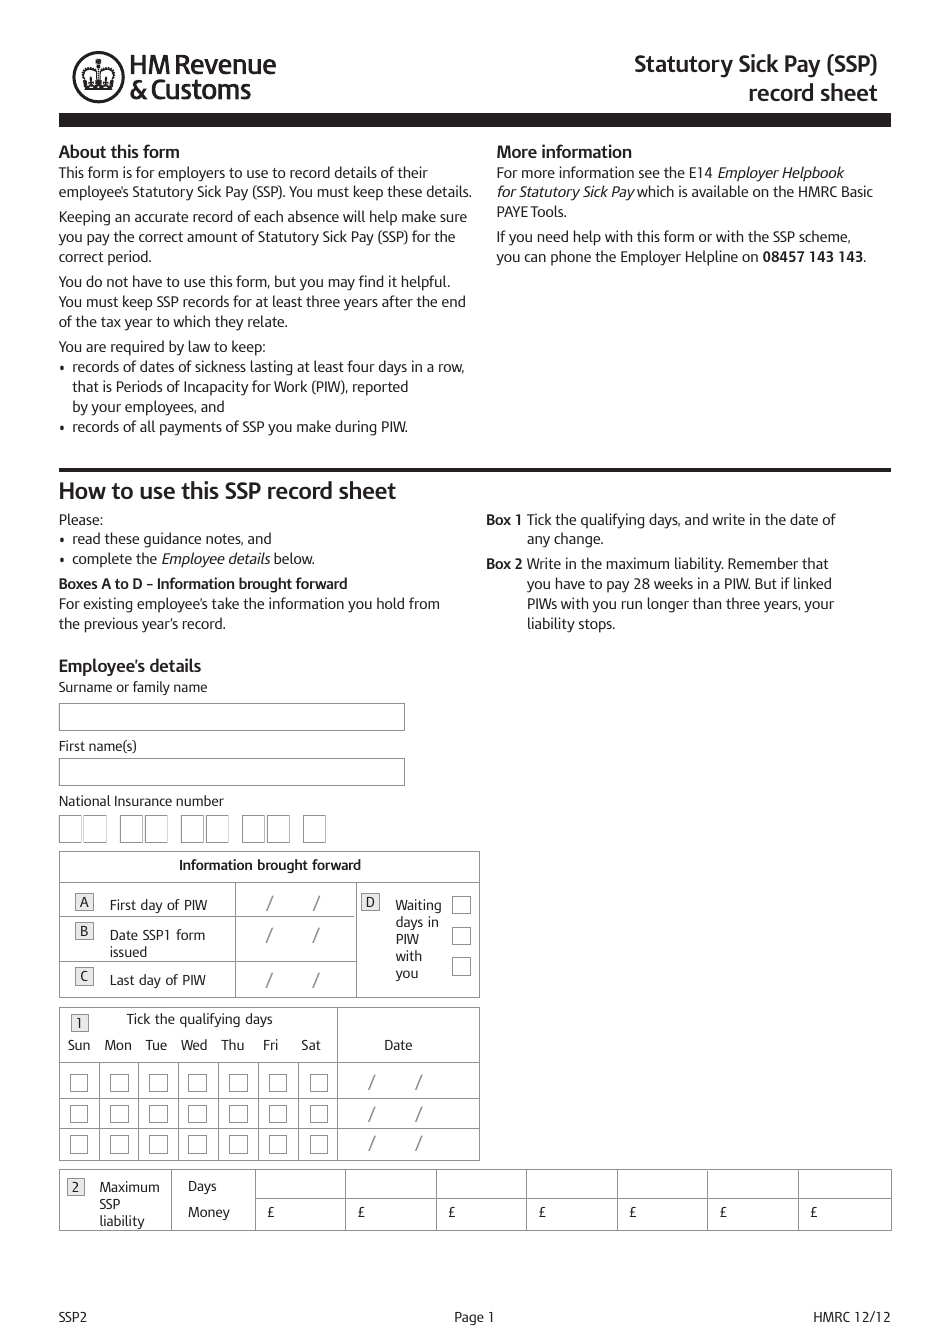 Form SSP2 Statutory Sick Pay SSP Record Sheet - United Kingdom, Page 1